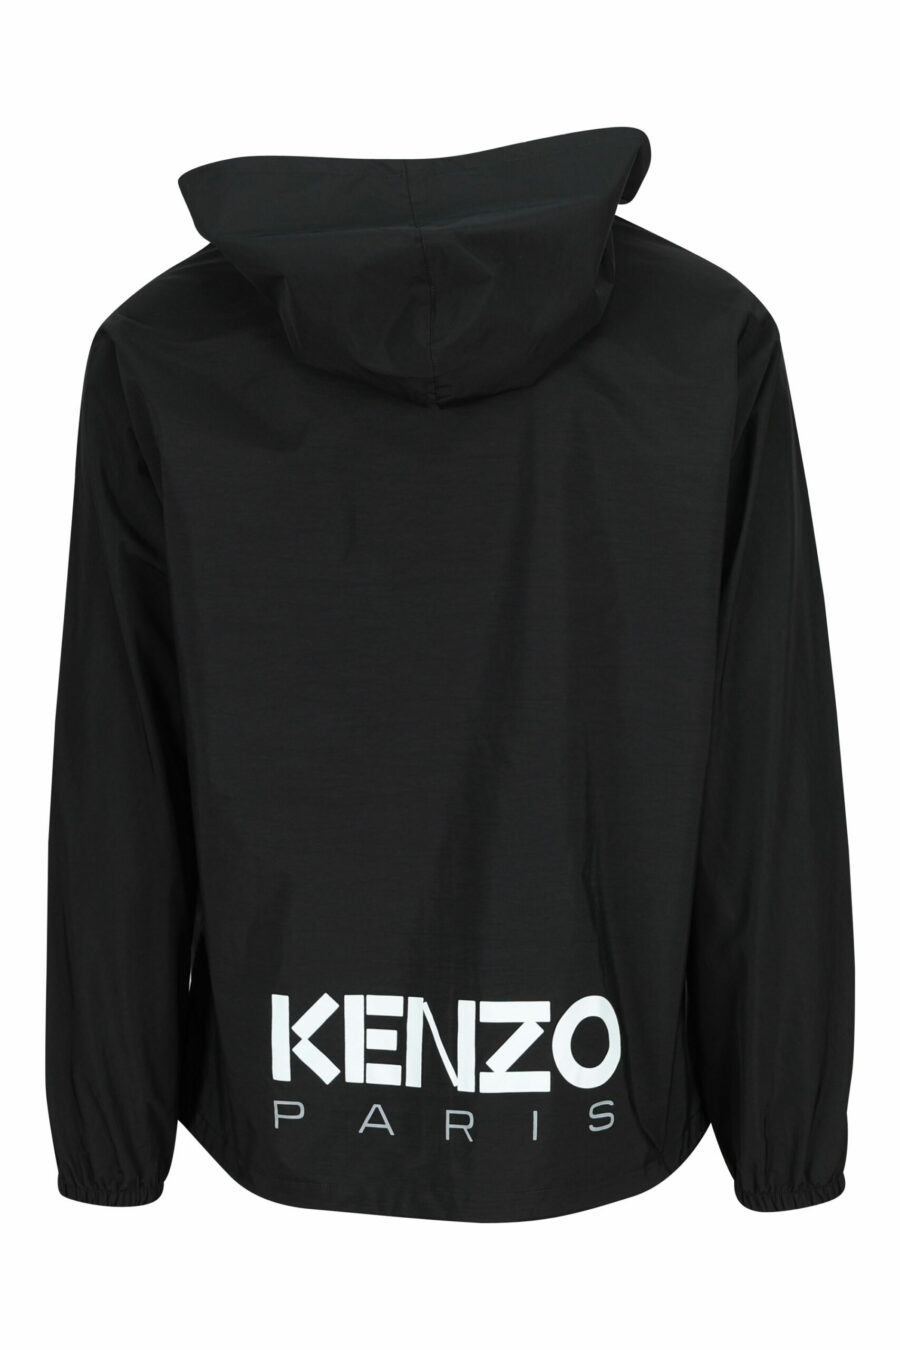 Chaqueta negra con capucha y minilogo "kenzo tag" - 3612230607057 1 scaled